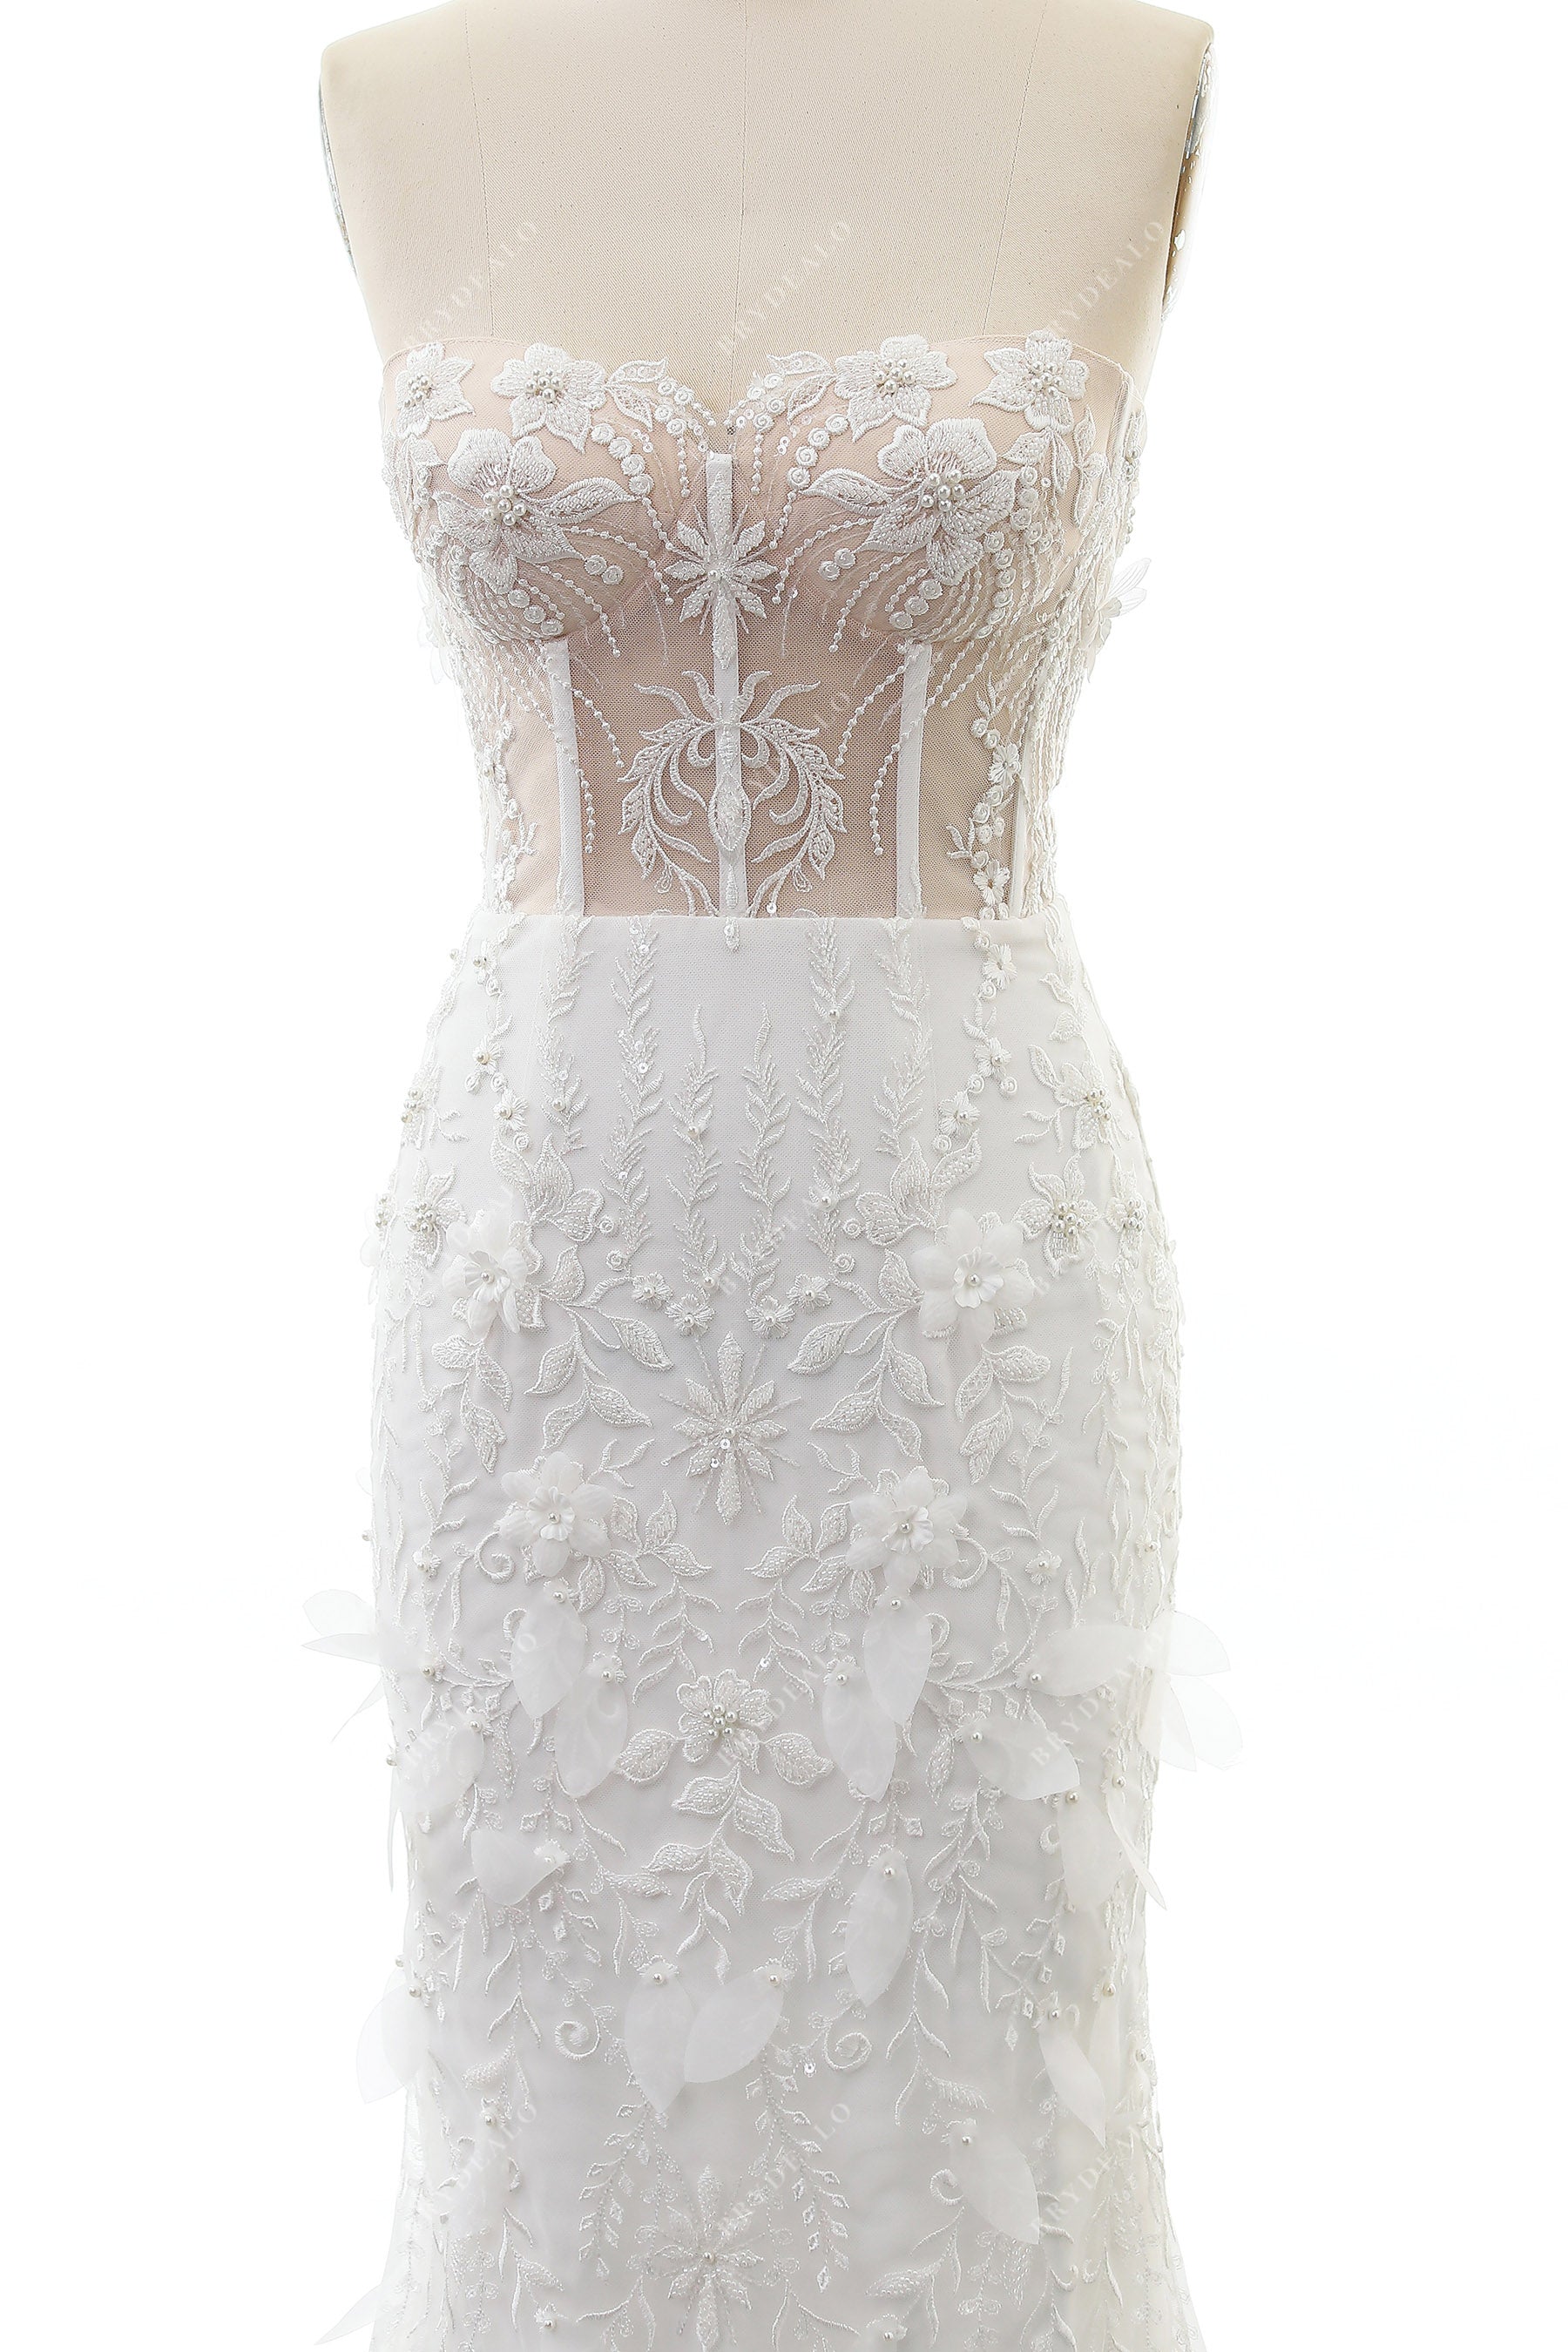 3D petals wedding gown